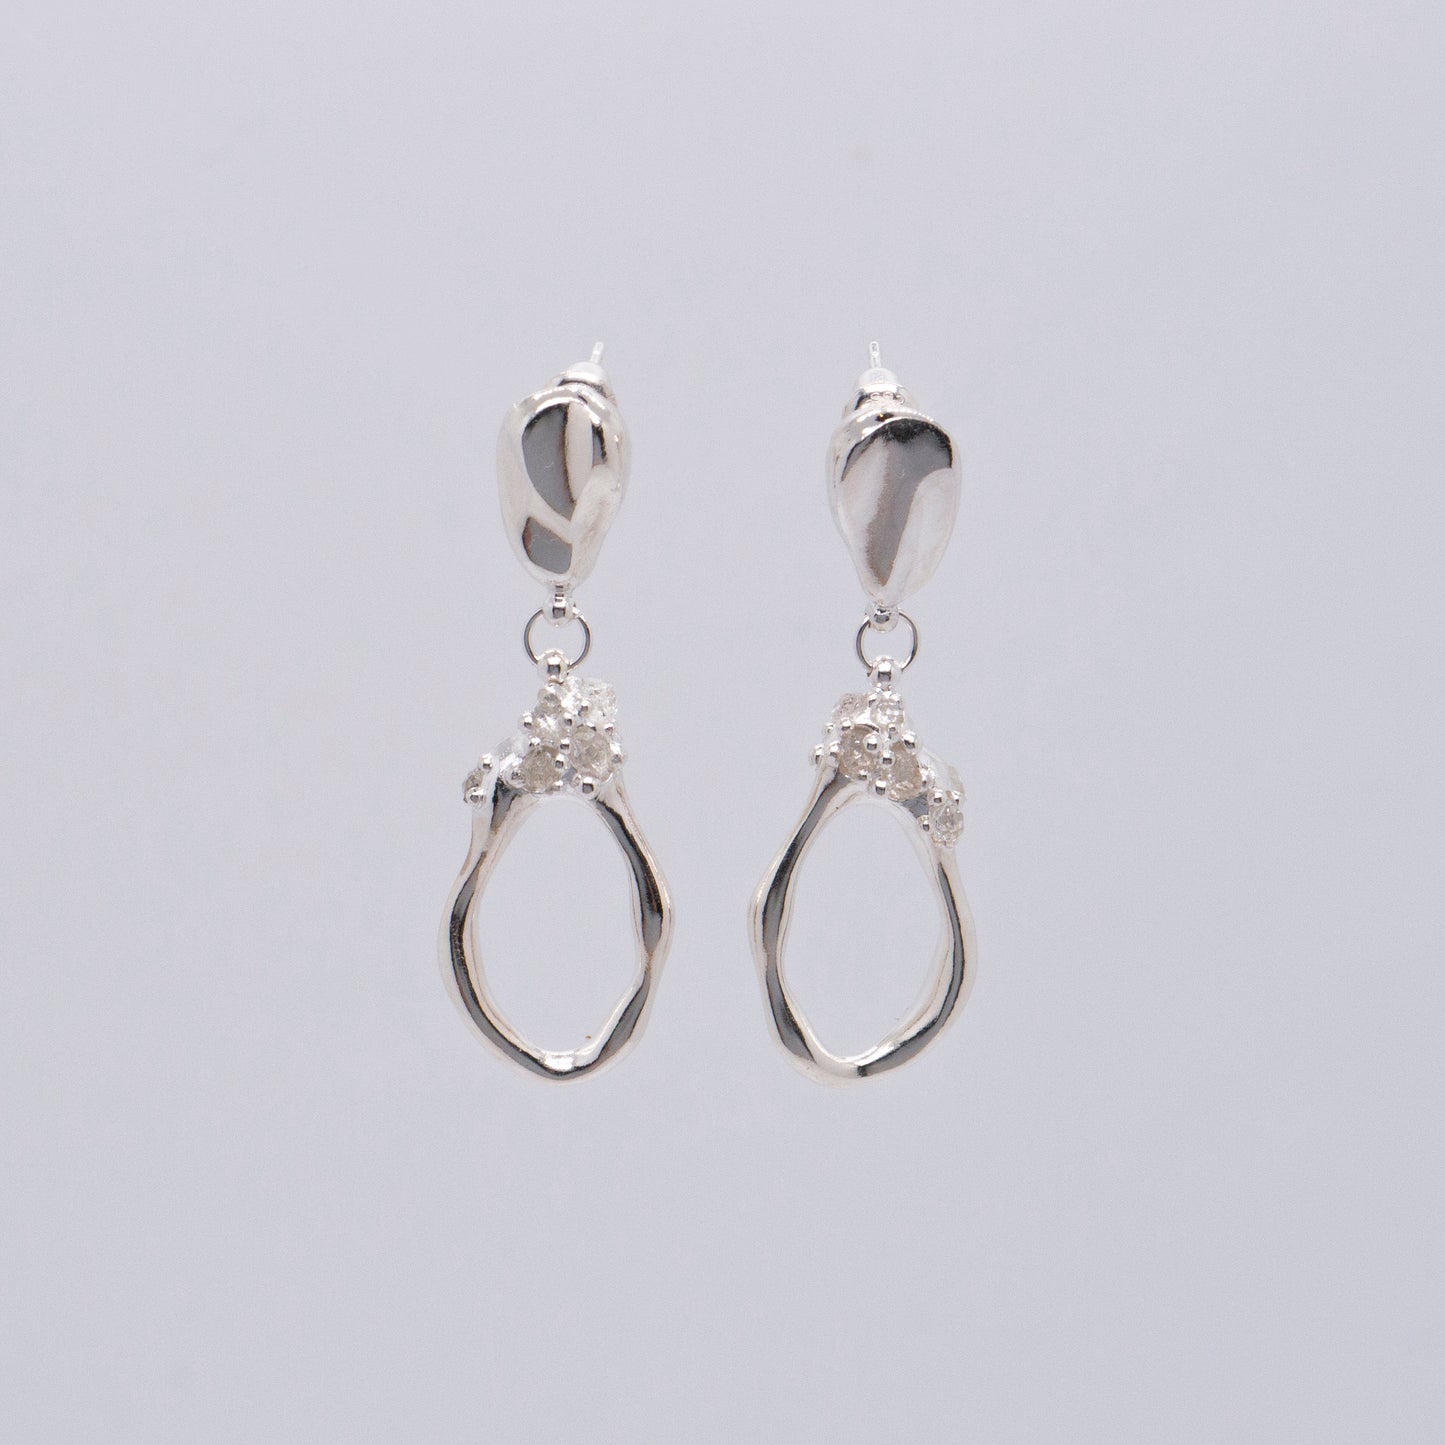 Space Ice - Herkimer Diamond Drop Earrings - S (Silver) 